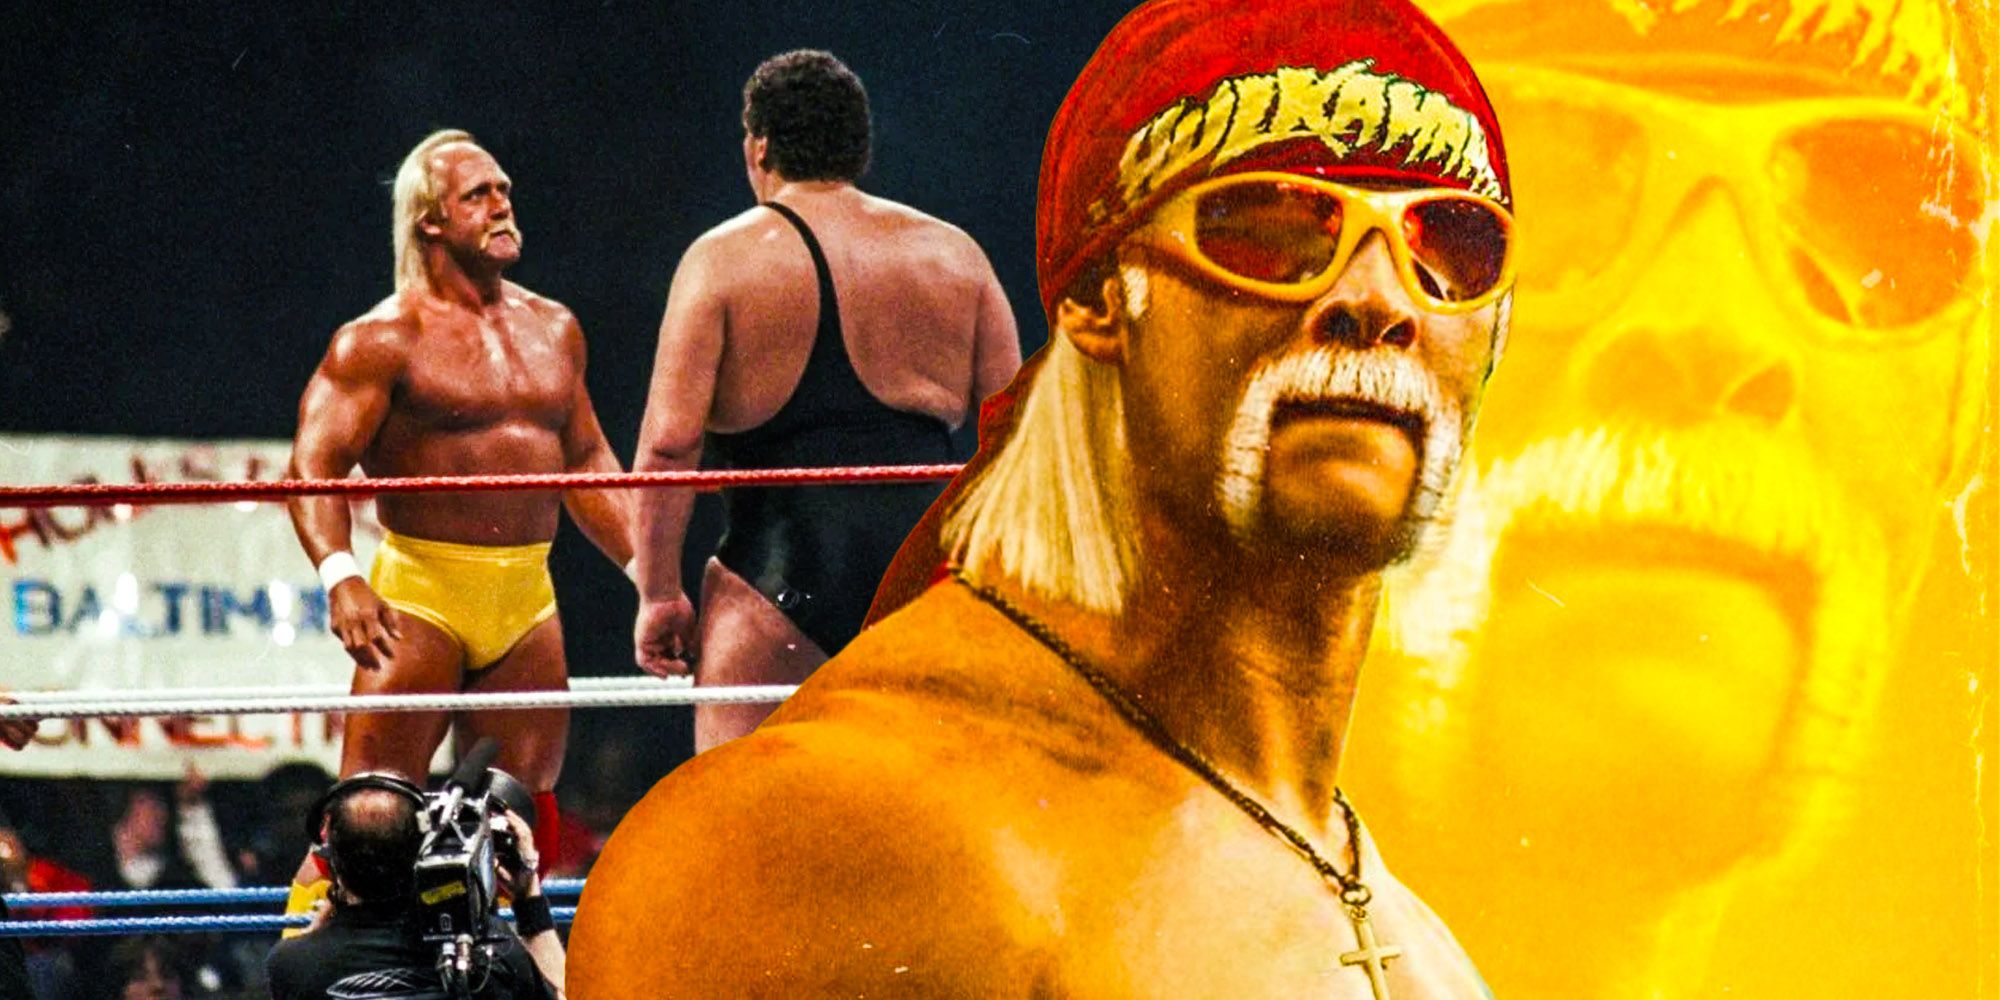 Hemsworth's Hulk Hogan Biopic: Best Wrestling Moments It Must Include